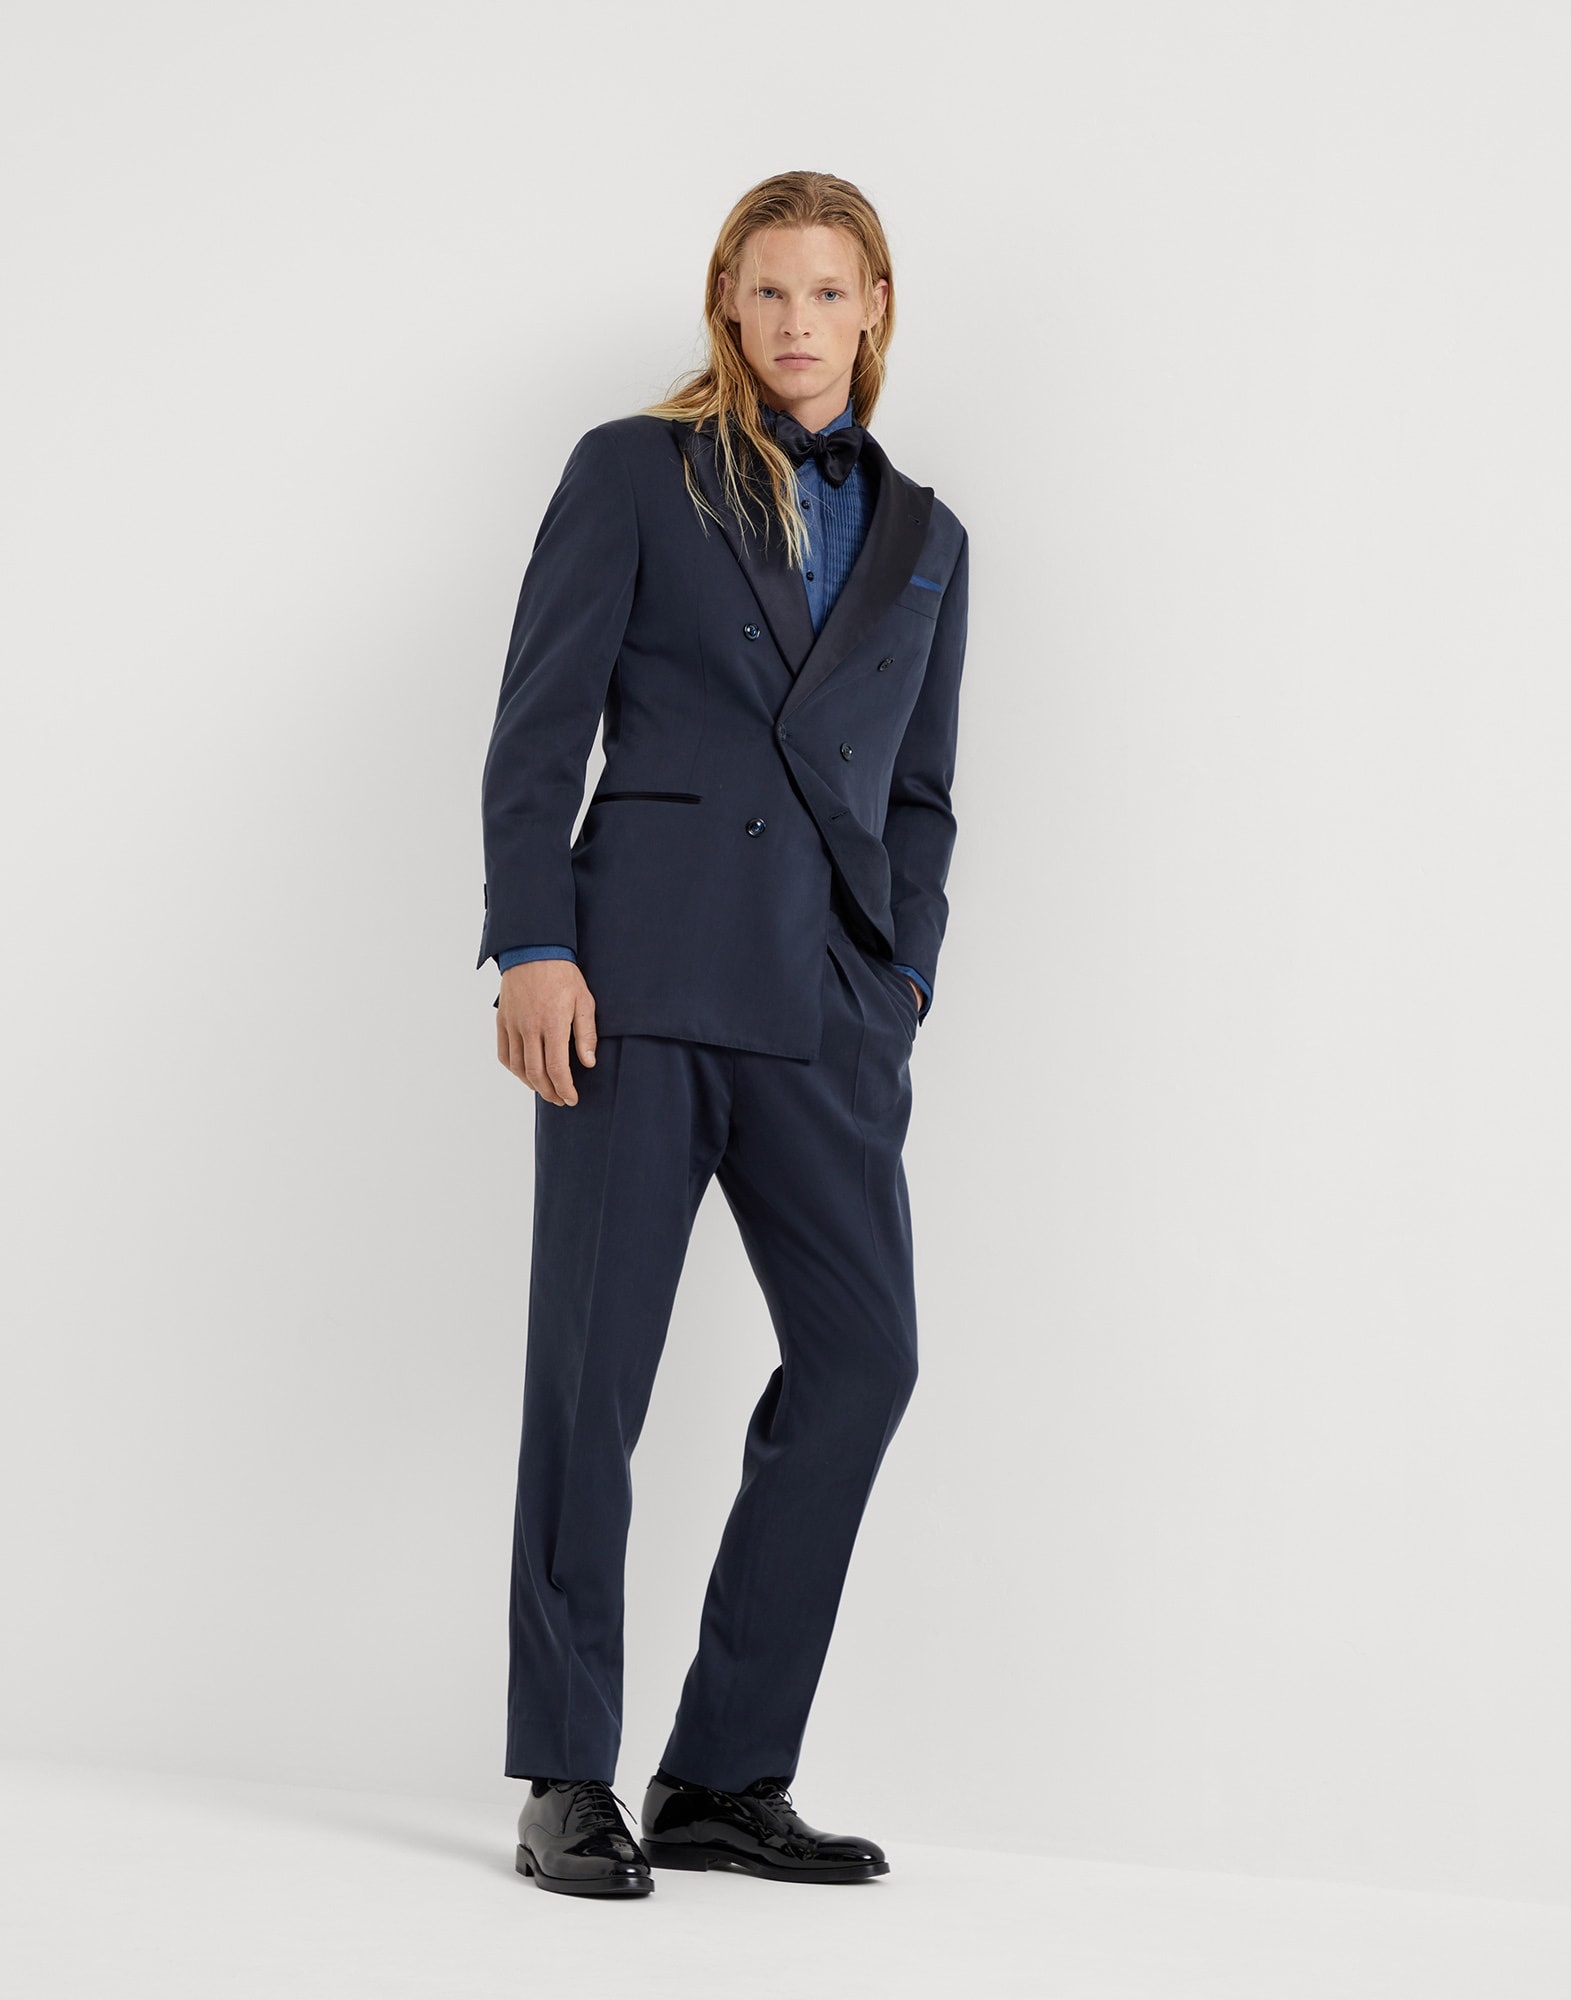 Lightweight denim slim fit tuxedo shirt with pleated bib, spread collar and French cuffs - 5